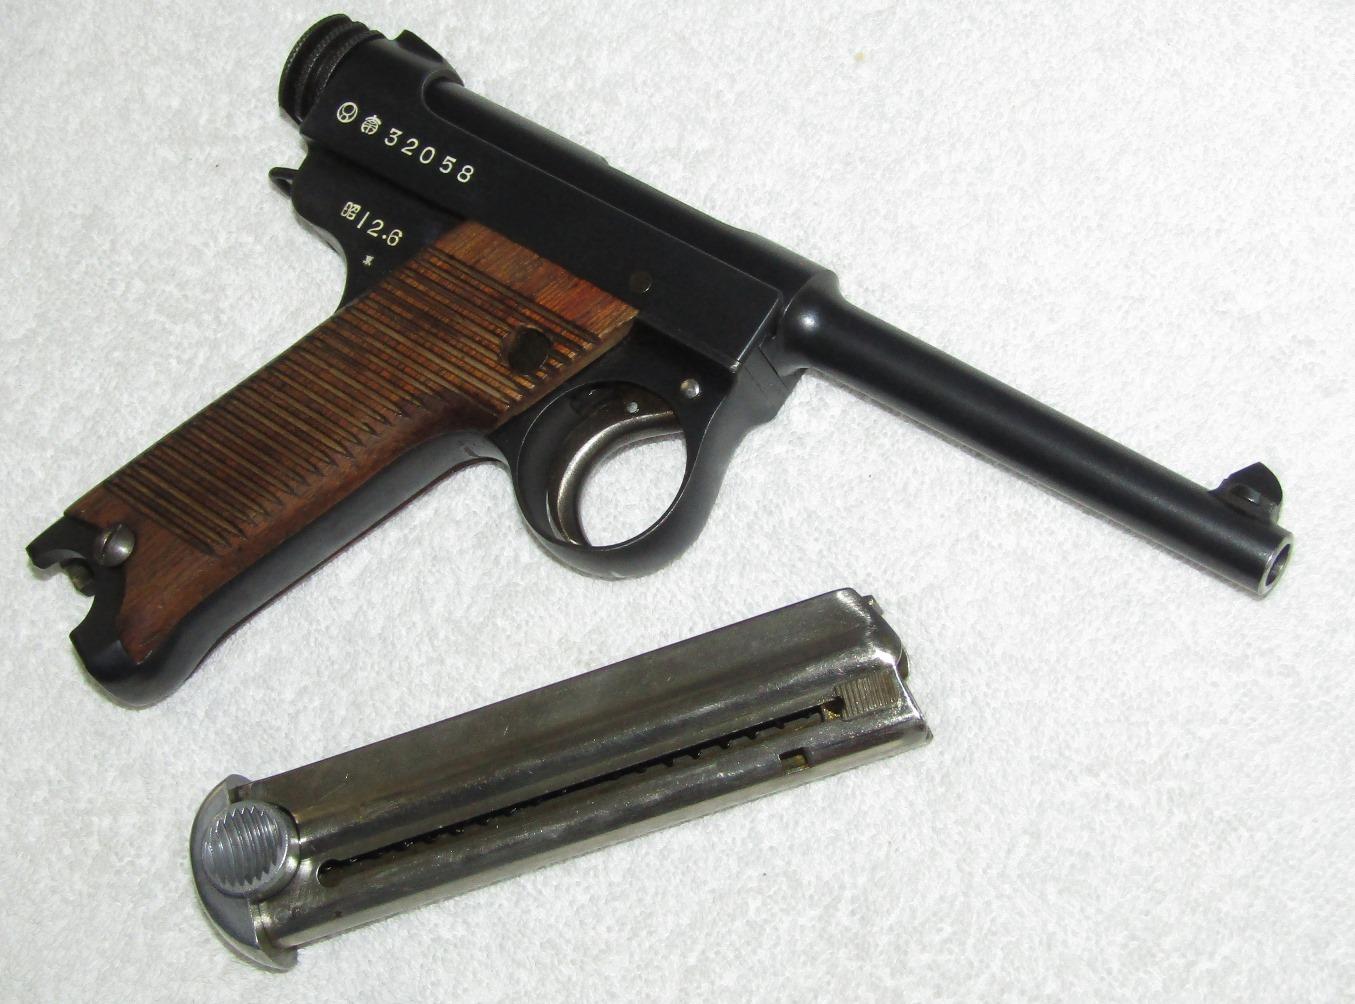 Exceptional Type 14 Nambu Pistol-1937 1st Series Nagoya/Chuo Kogyo (Kokubunji Factory)